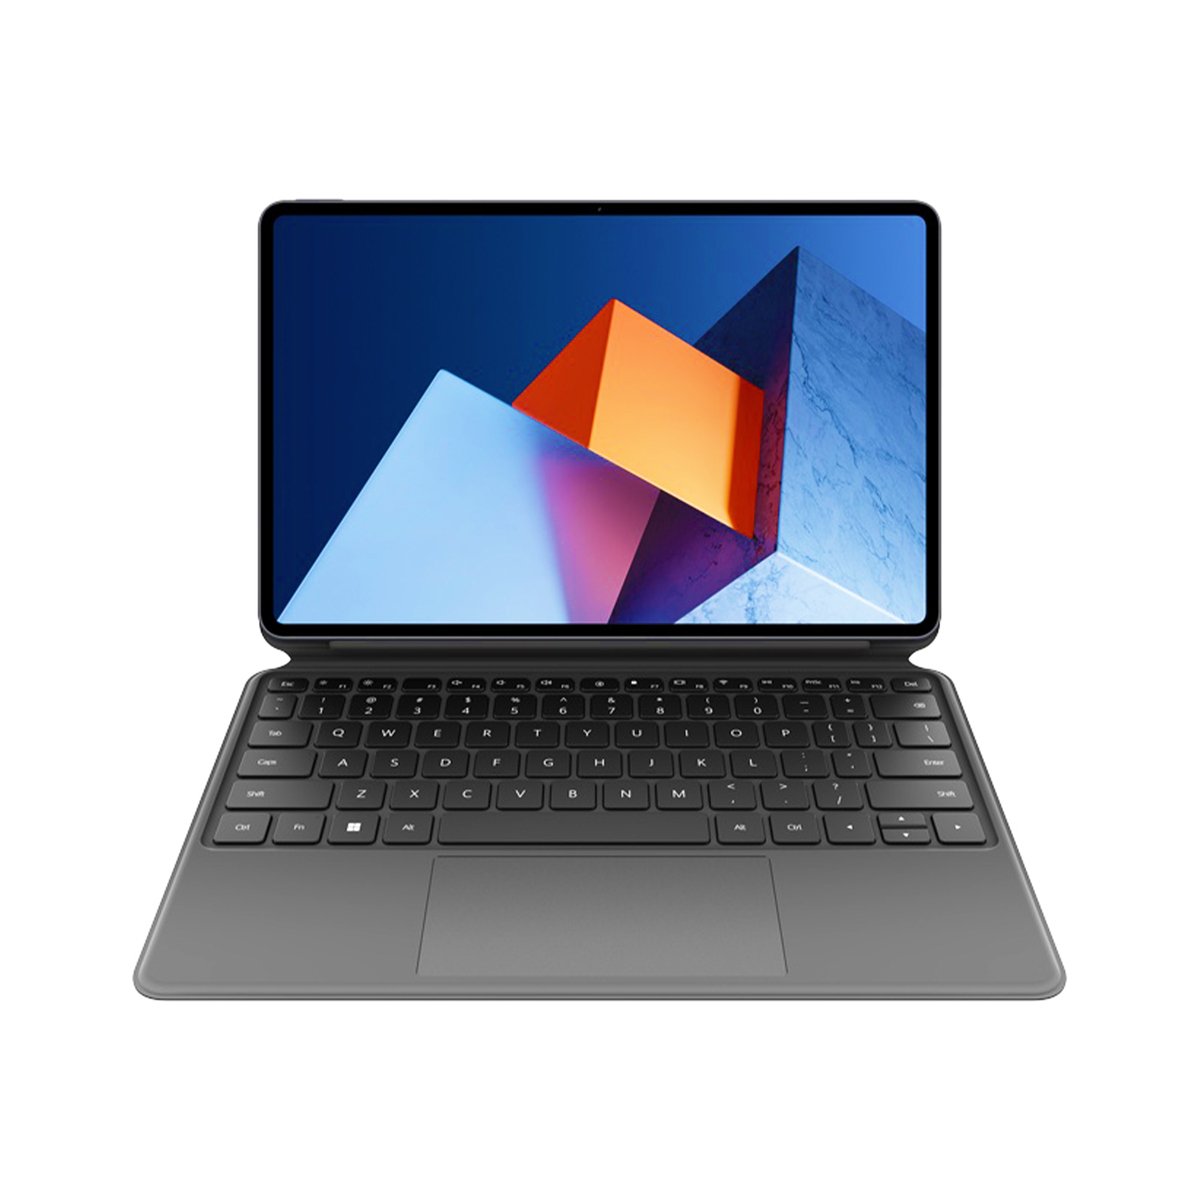 Huawei MateBook E D-W7651TA Convertible 2 in 1 Laptop - 12.6” QHD AMOLED Touch Screen Display, 11th Gen Intel Core i7-1160G7 Processor, 16GB RAM, 512GB SSD, Intel Iris Xe Graphics, Nebula Grey